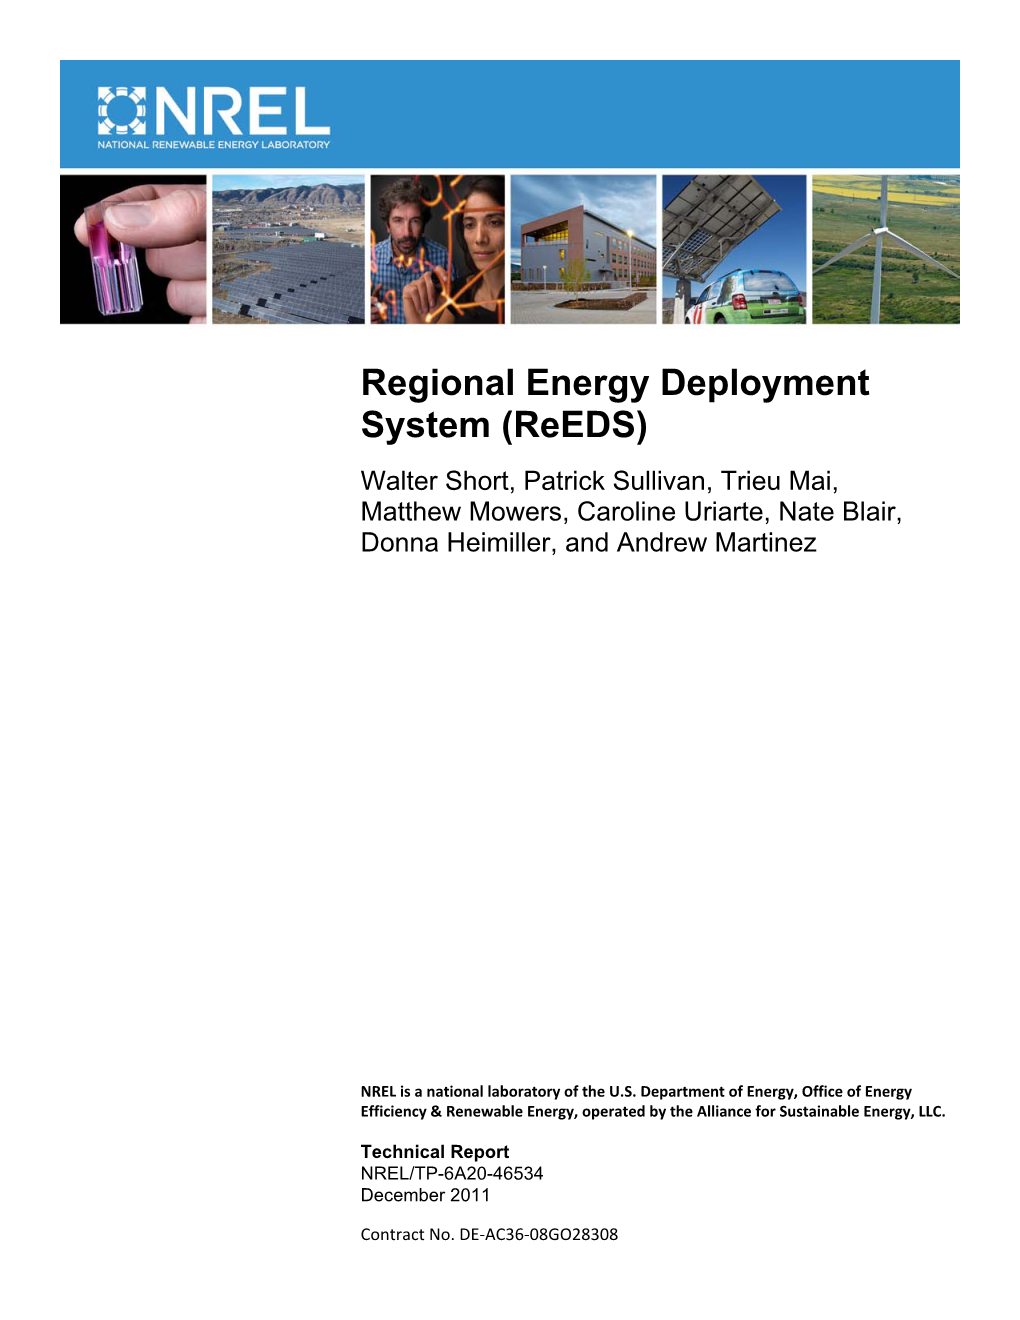 Regional Energy Deployment System (Reeds)